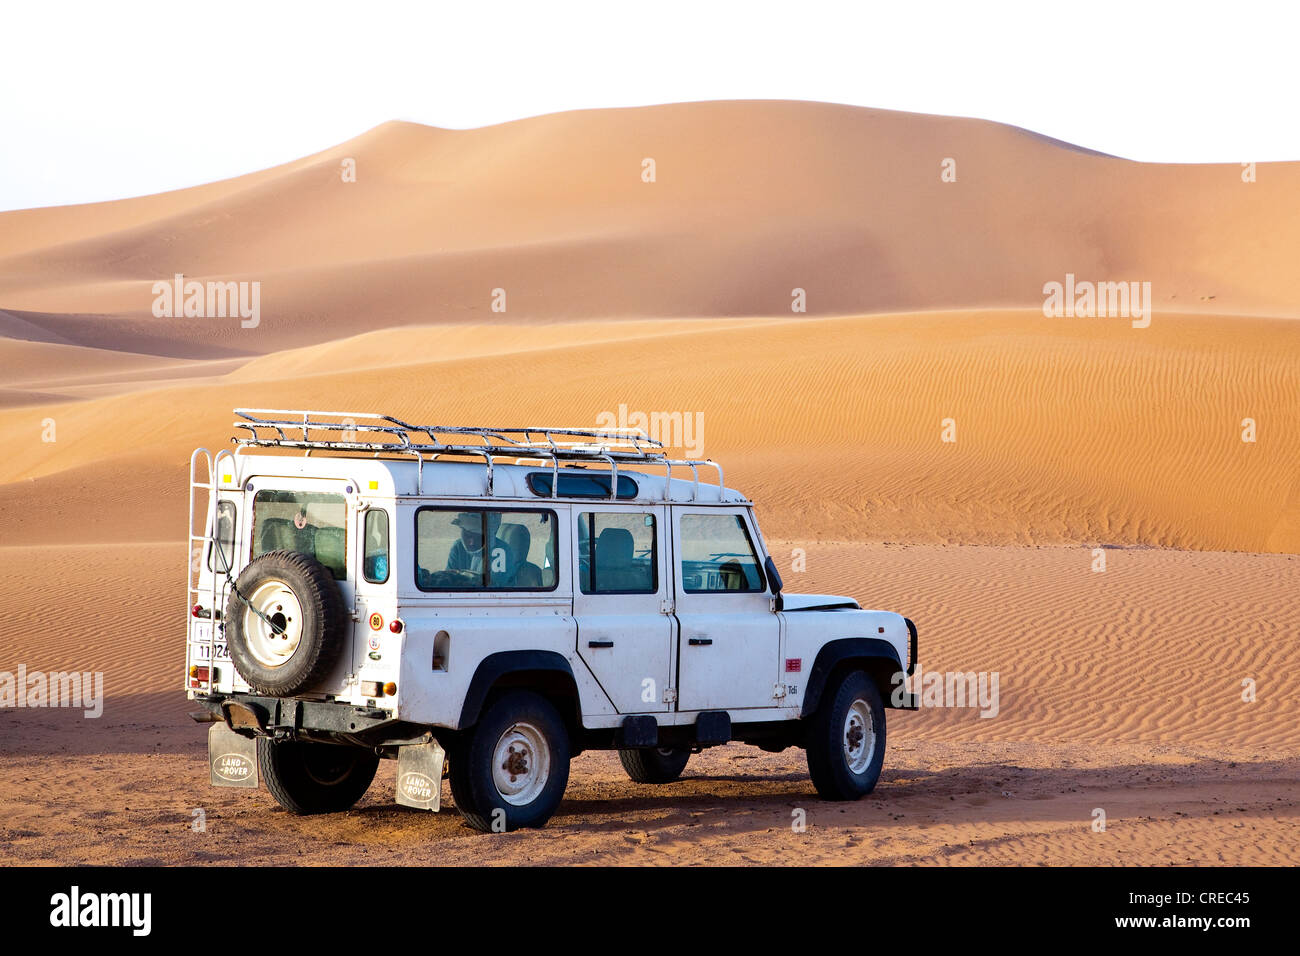 All-terrain vehicle, Land Rover Defender, sand dunes of Erg Chegaga, Sahara Desert near Mhamid, Morocco, Africa Stock Photo